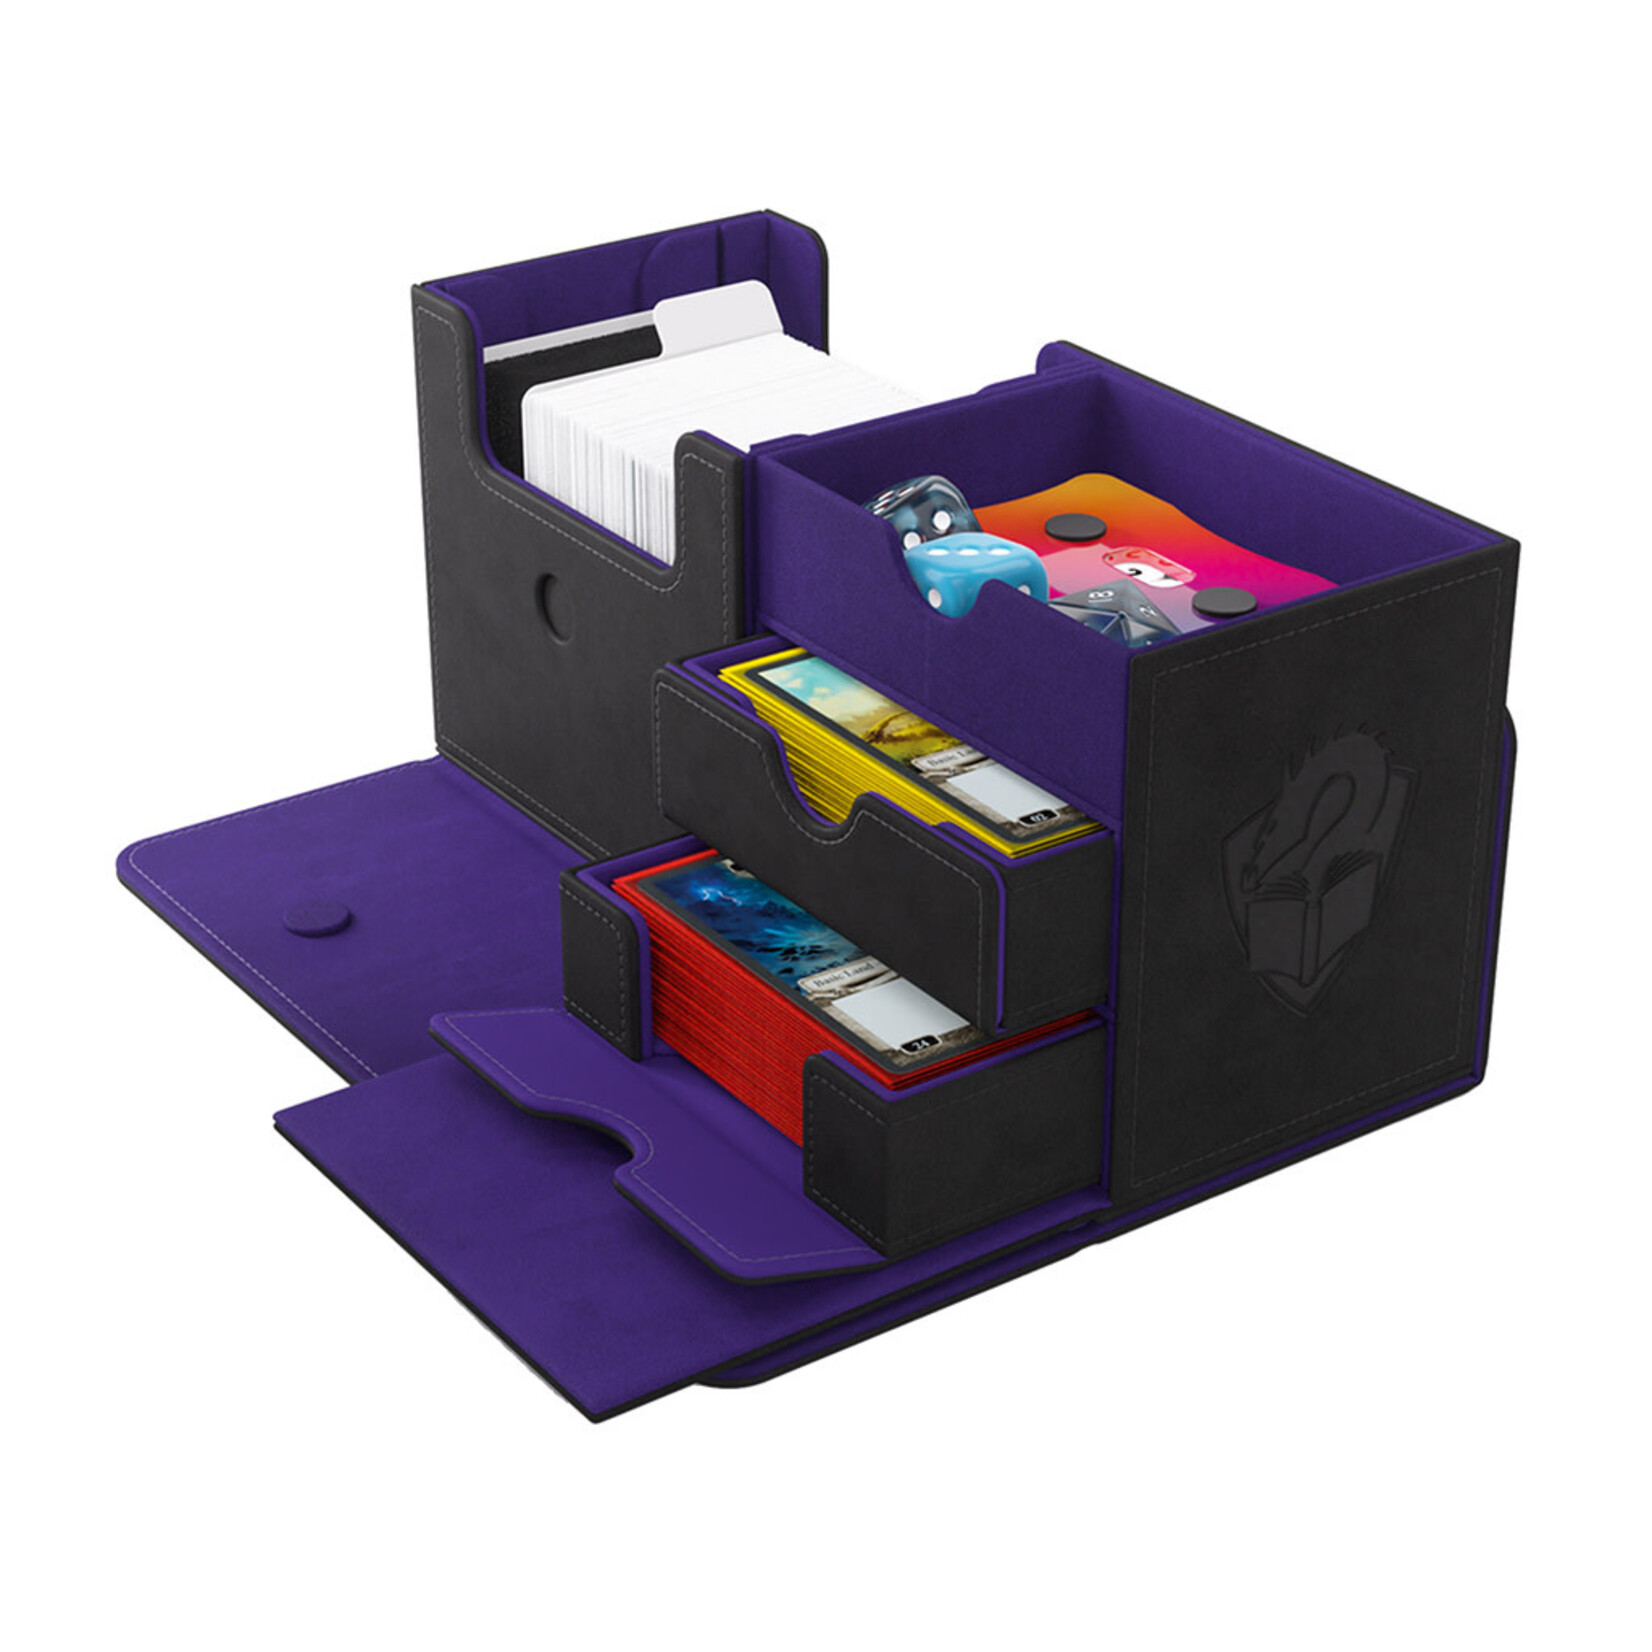 The Academic 133+ XL Black/Purple Deck Box